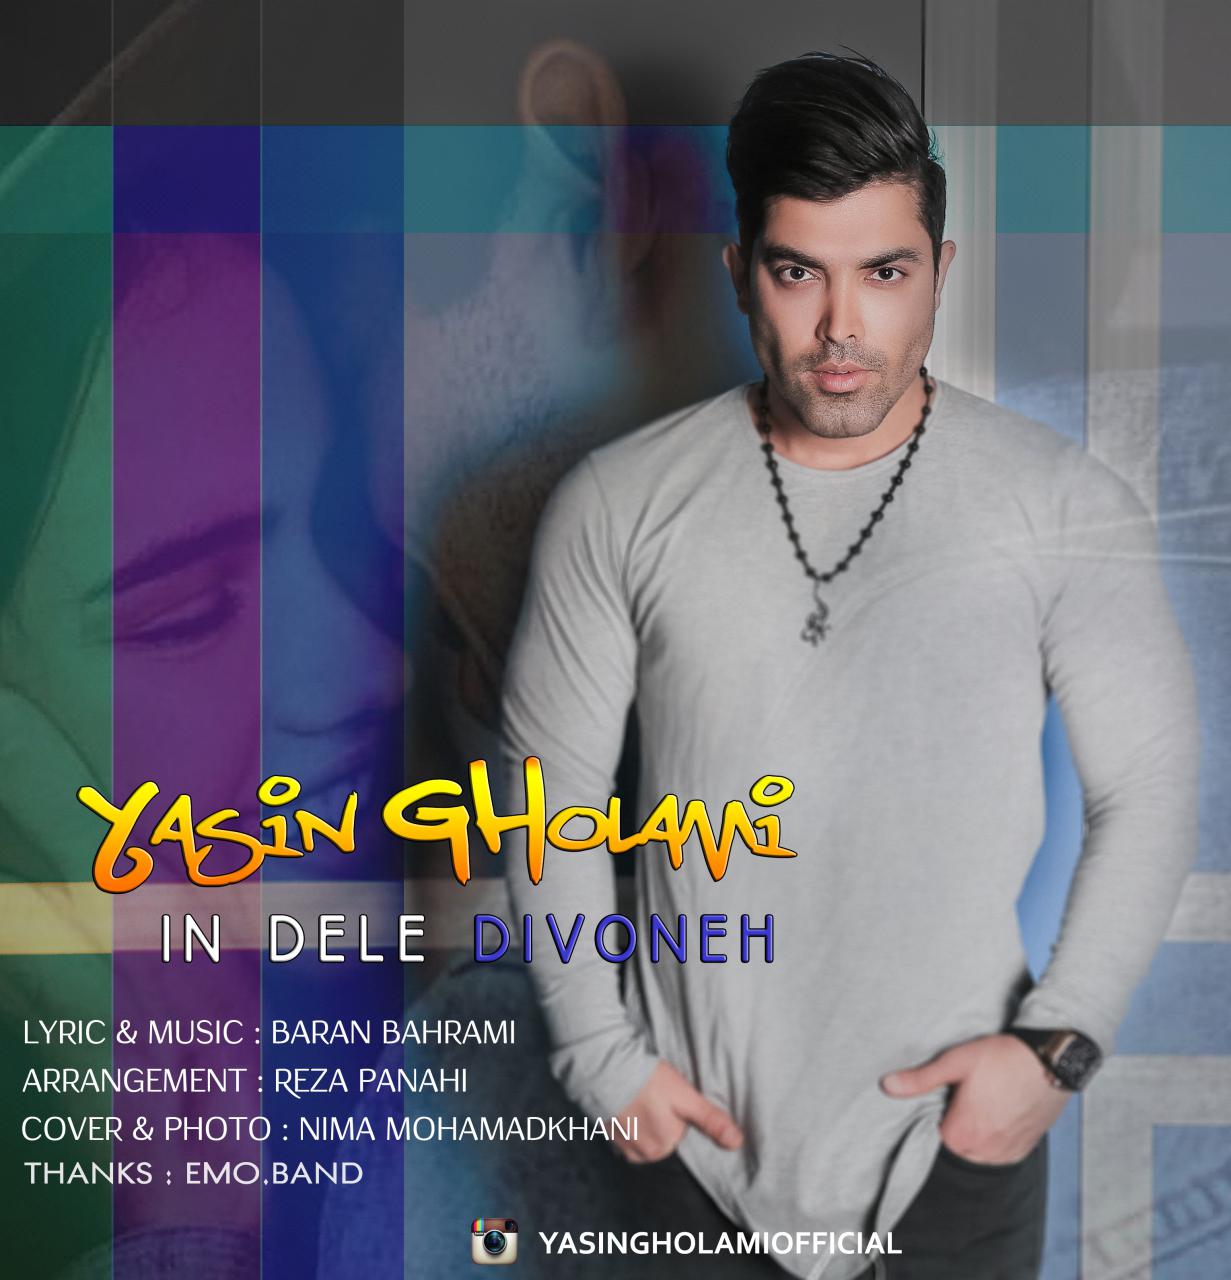  دانلود آهنگ جدید یاسین غلامی - این دل دیوونه | Download New Music By Yasin Gholami - In Dele Divoneh